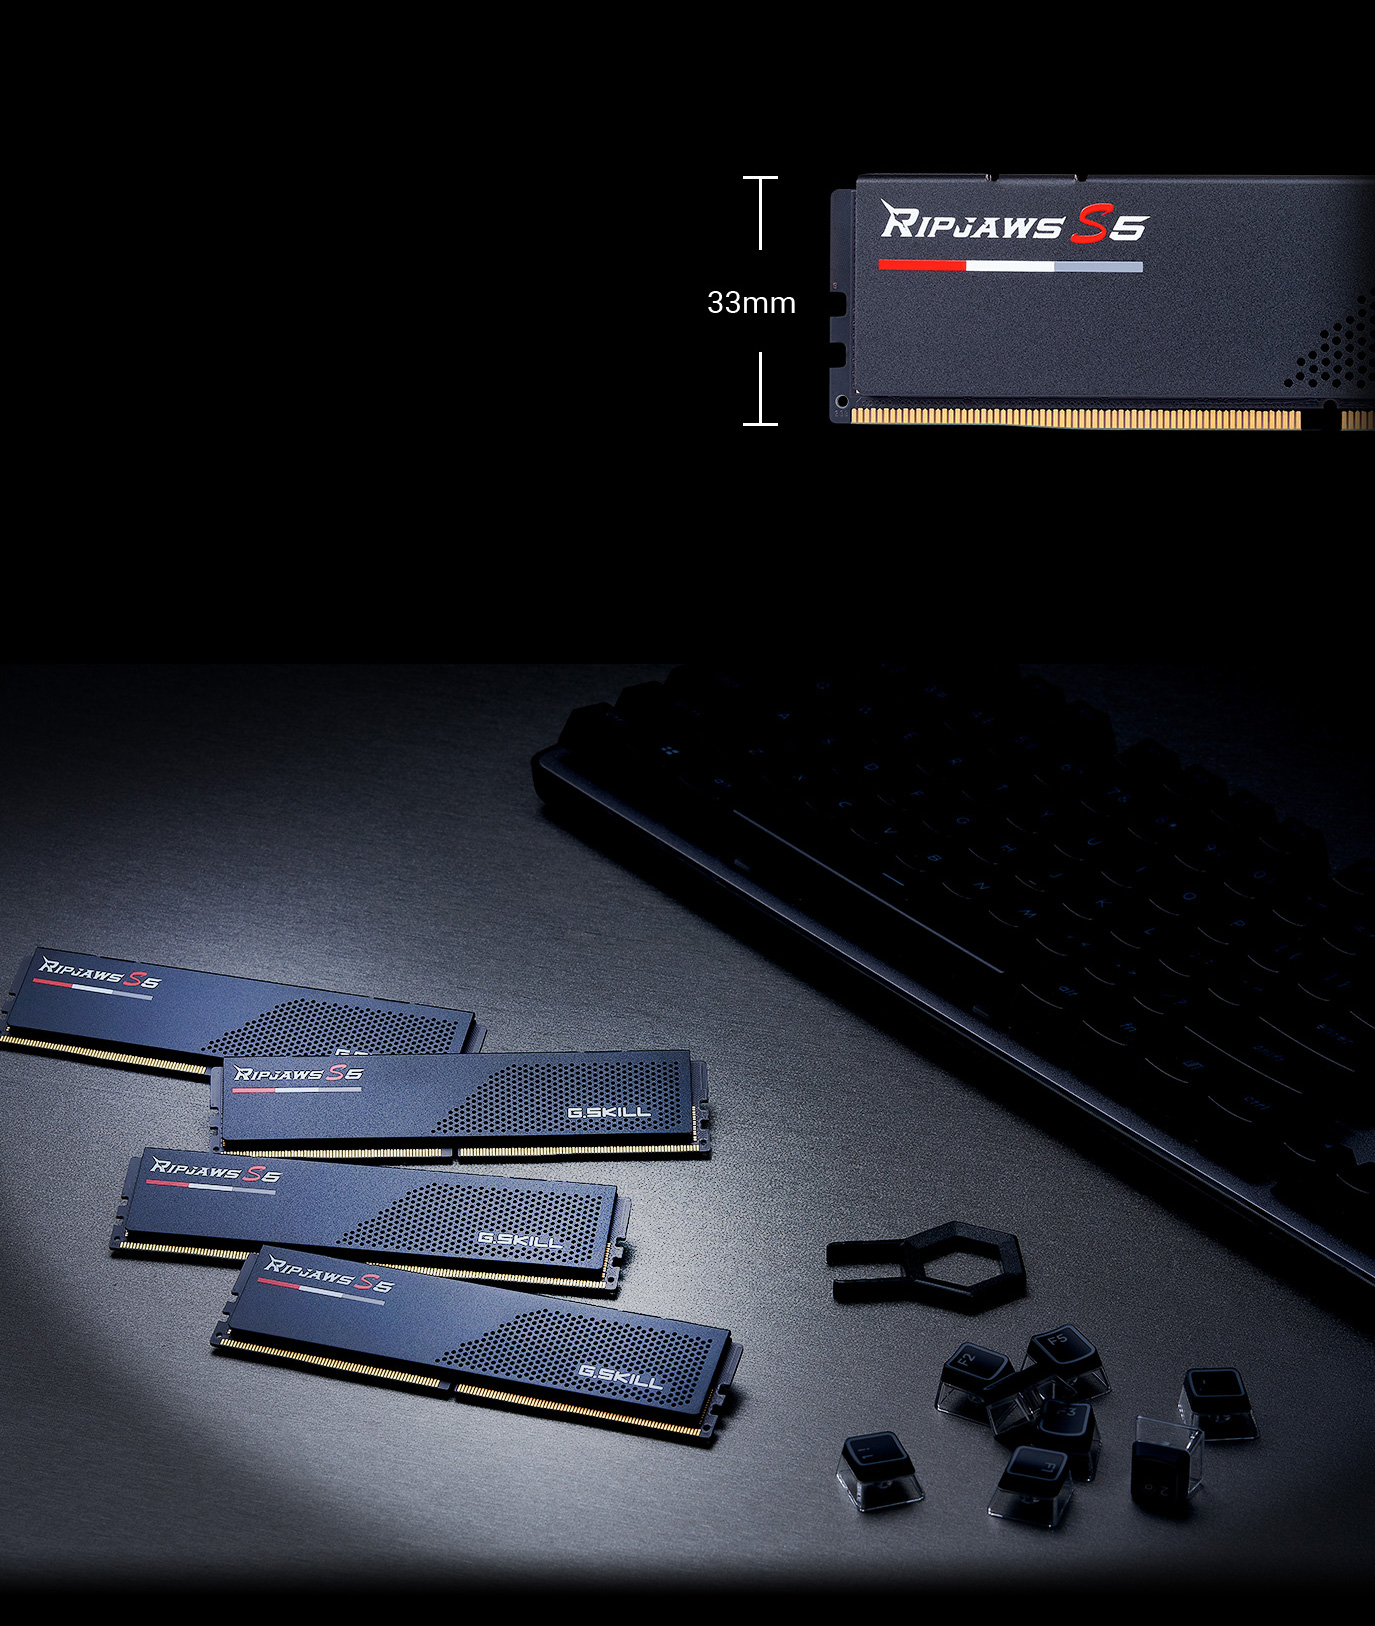 Ripjaws S5 DDR5 DRAM memory